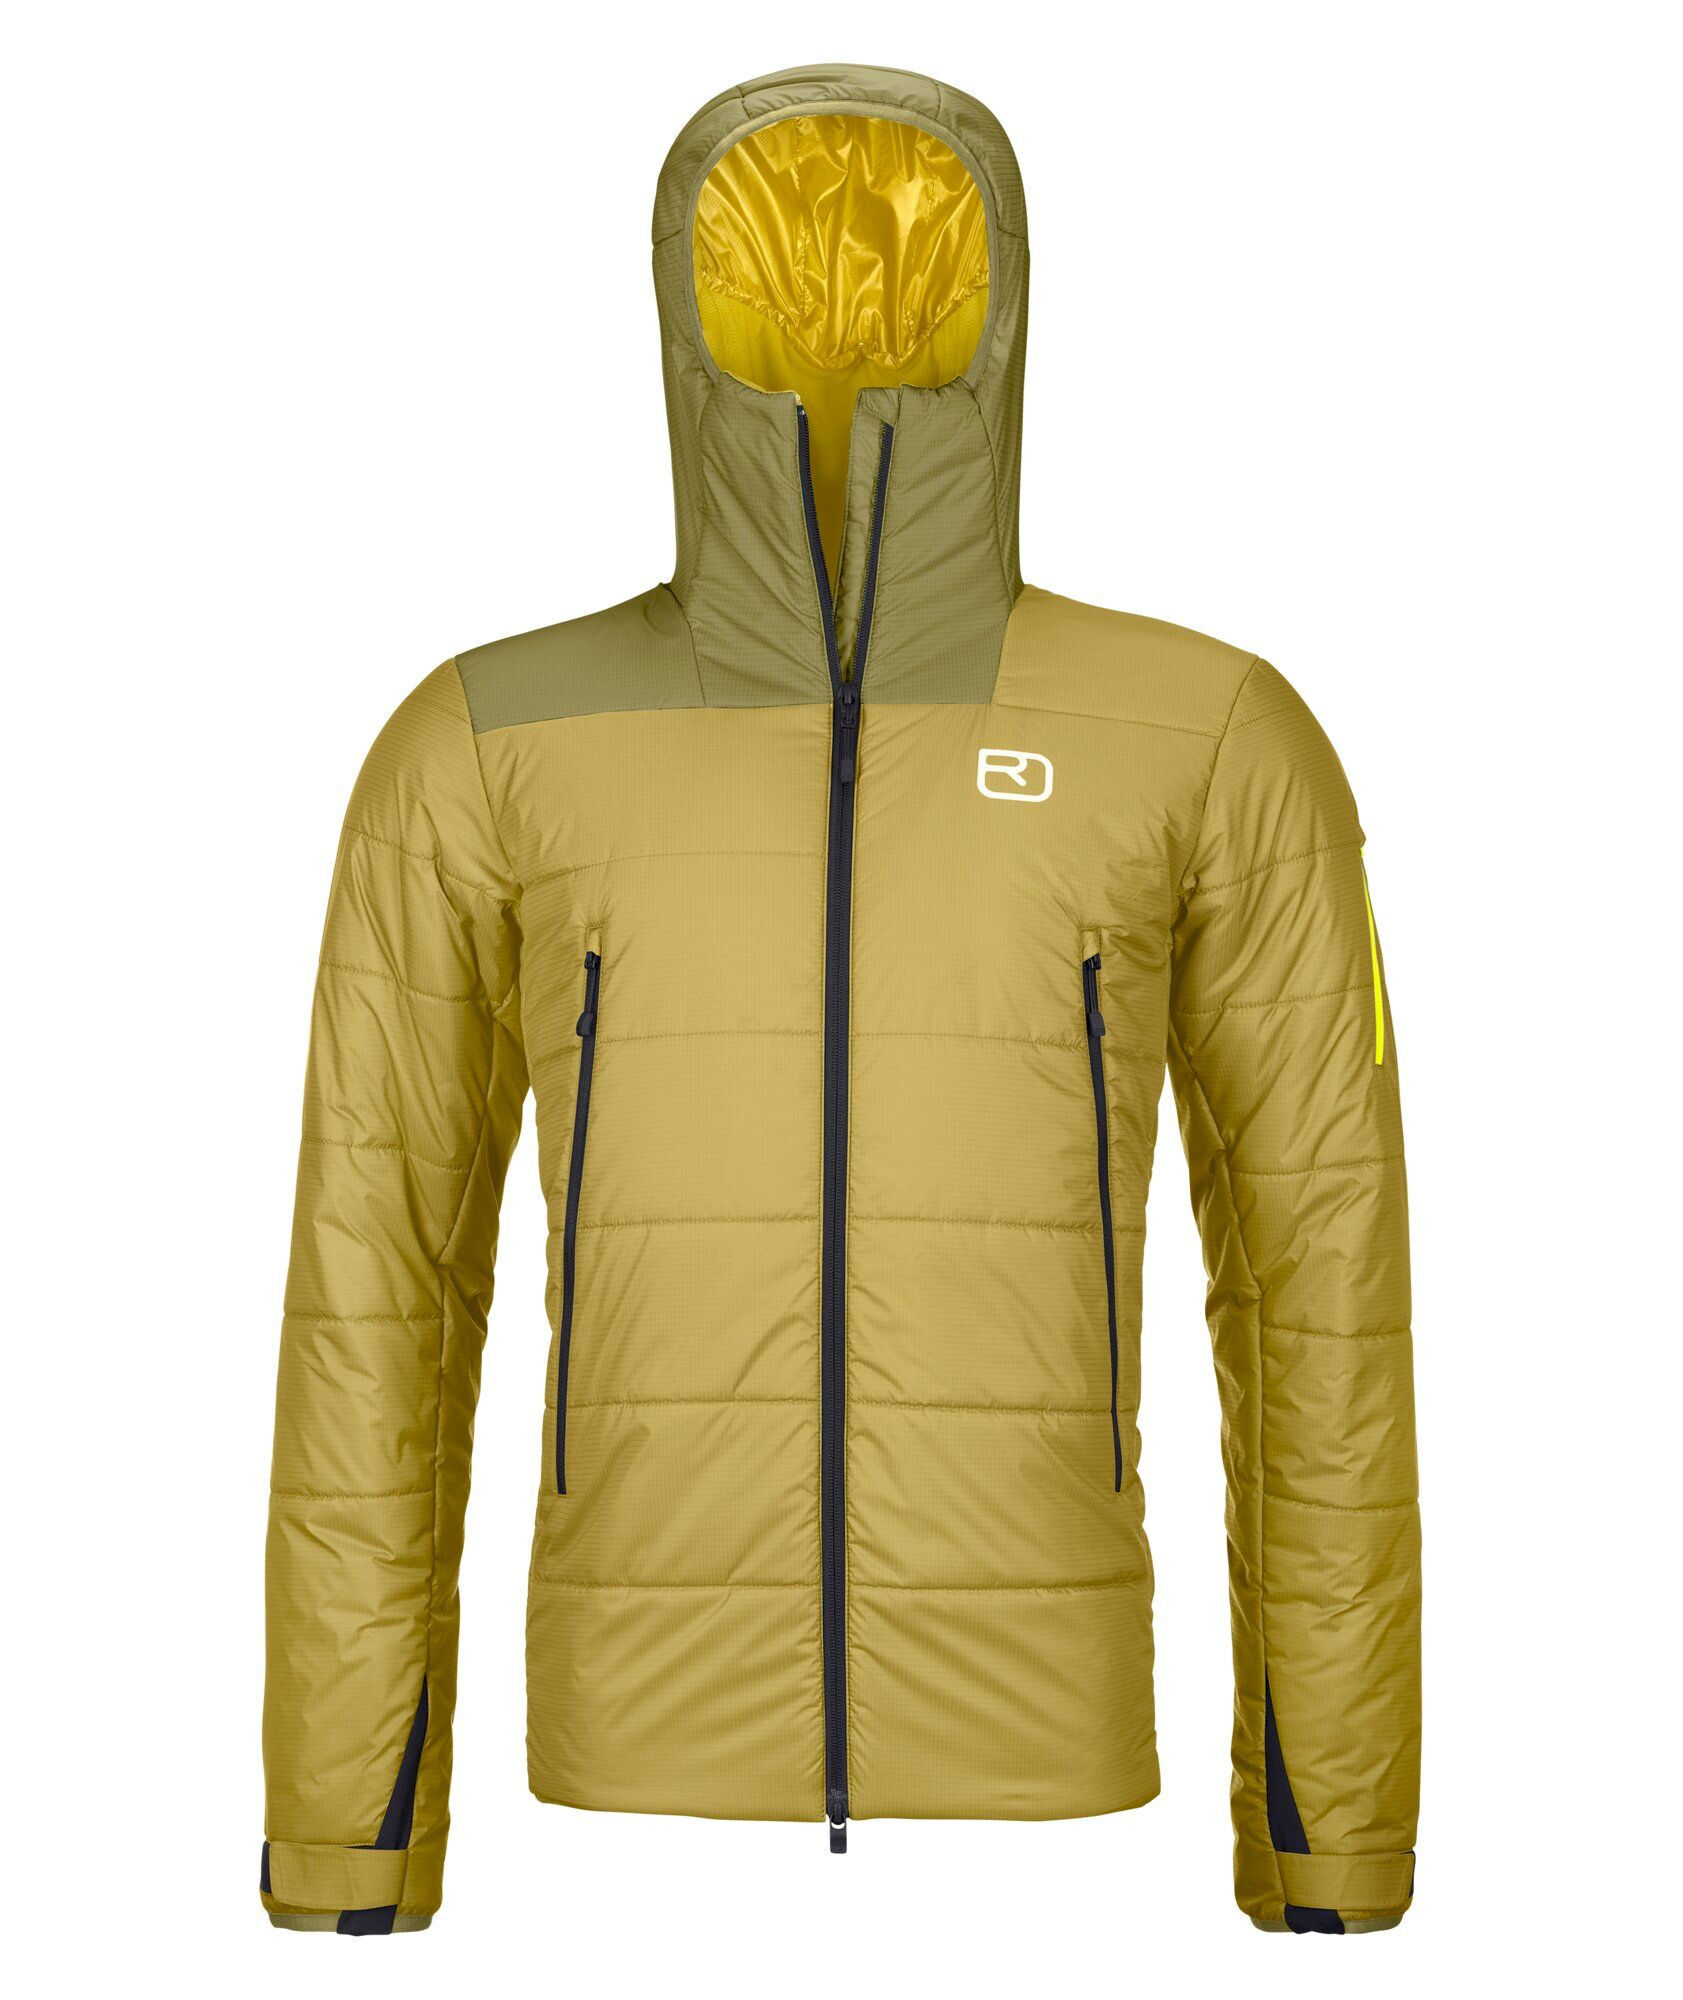 Ortovox Swisswool Zinal Jacket - Synthetic jacket - Men's